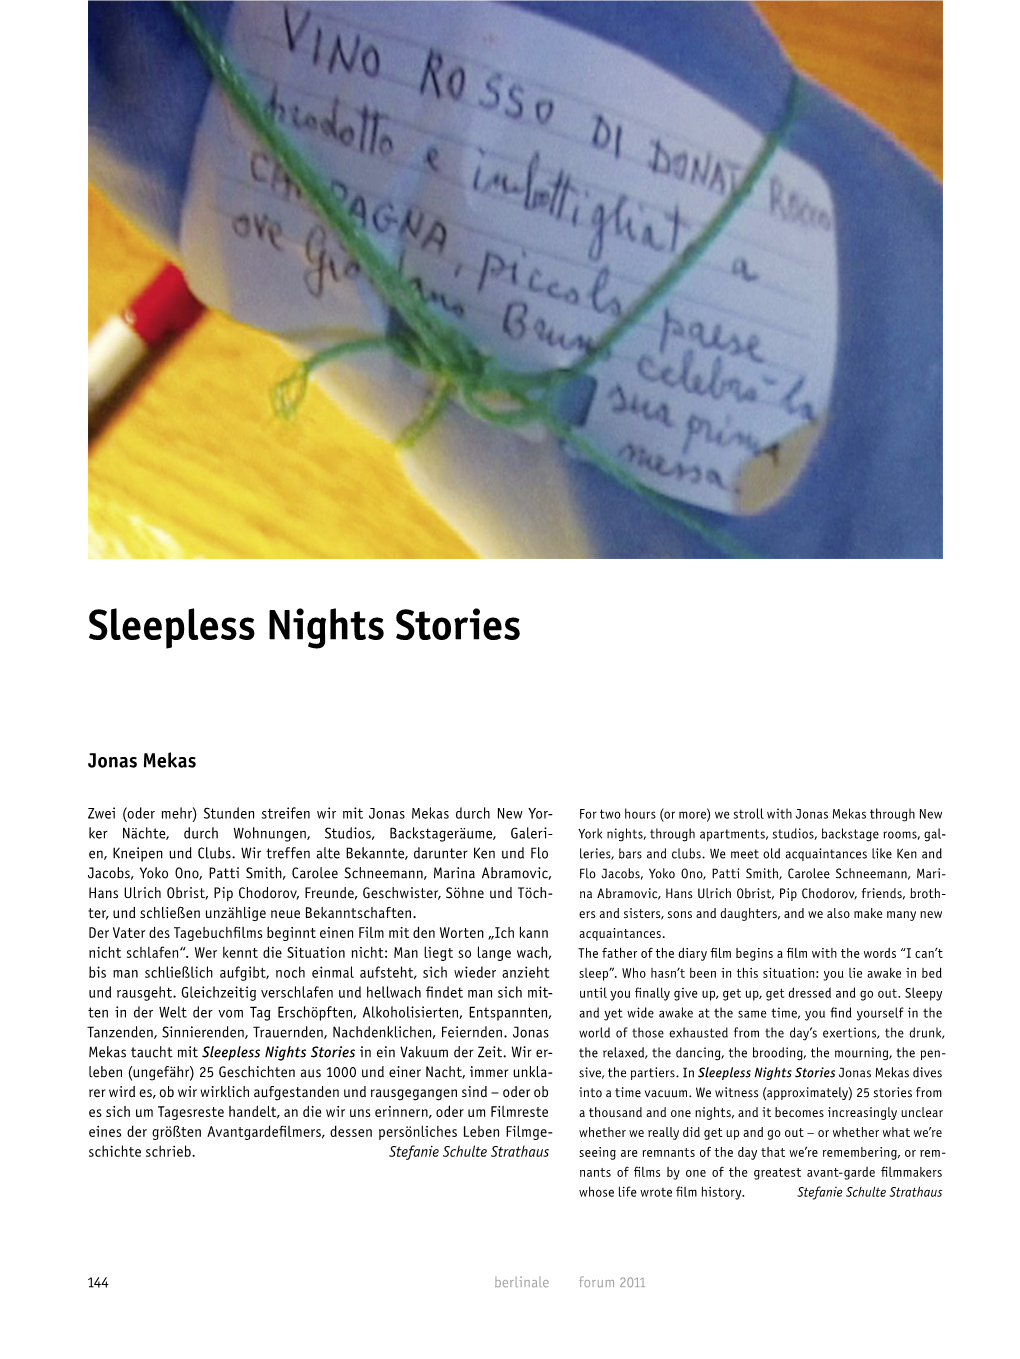 Sleepless Nights Stories